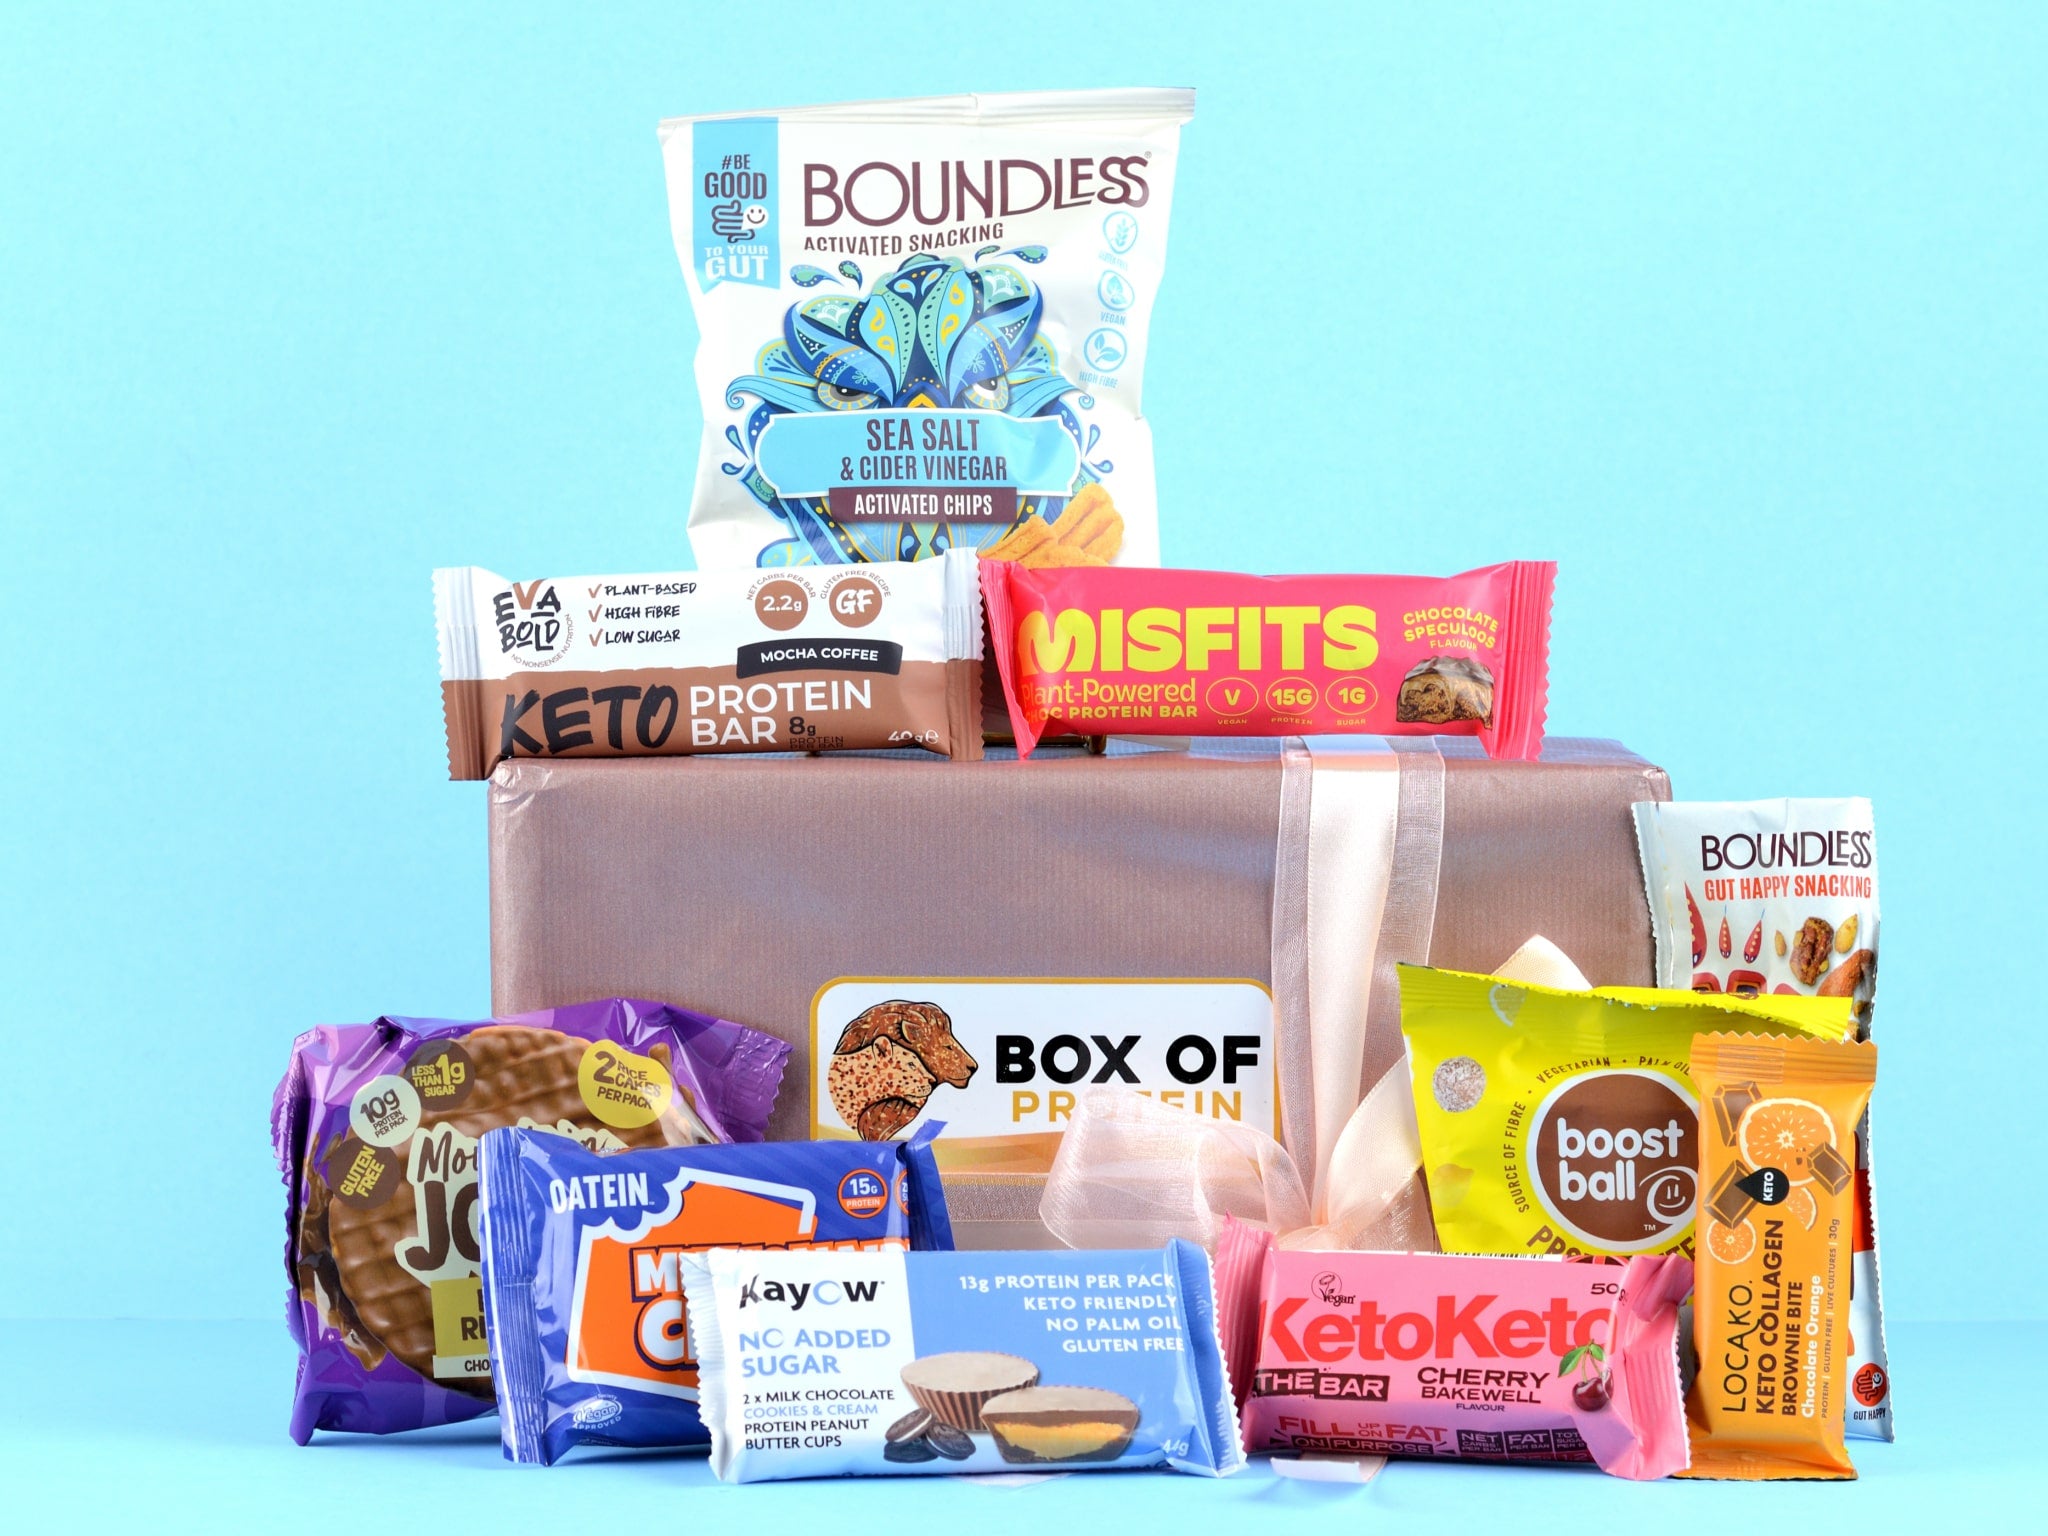 Box Of Protein | Gluten Free Diet Gift Box | Protein Snacks Hamper | Boundless, Eva Bold Keto Protein Bar, Misfits, Mountain Joes, Oatein, Kayow, Keto Keto, Boost Ball, Locako